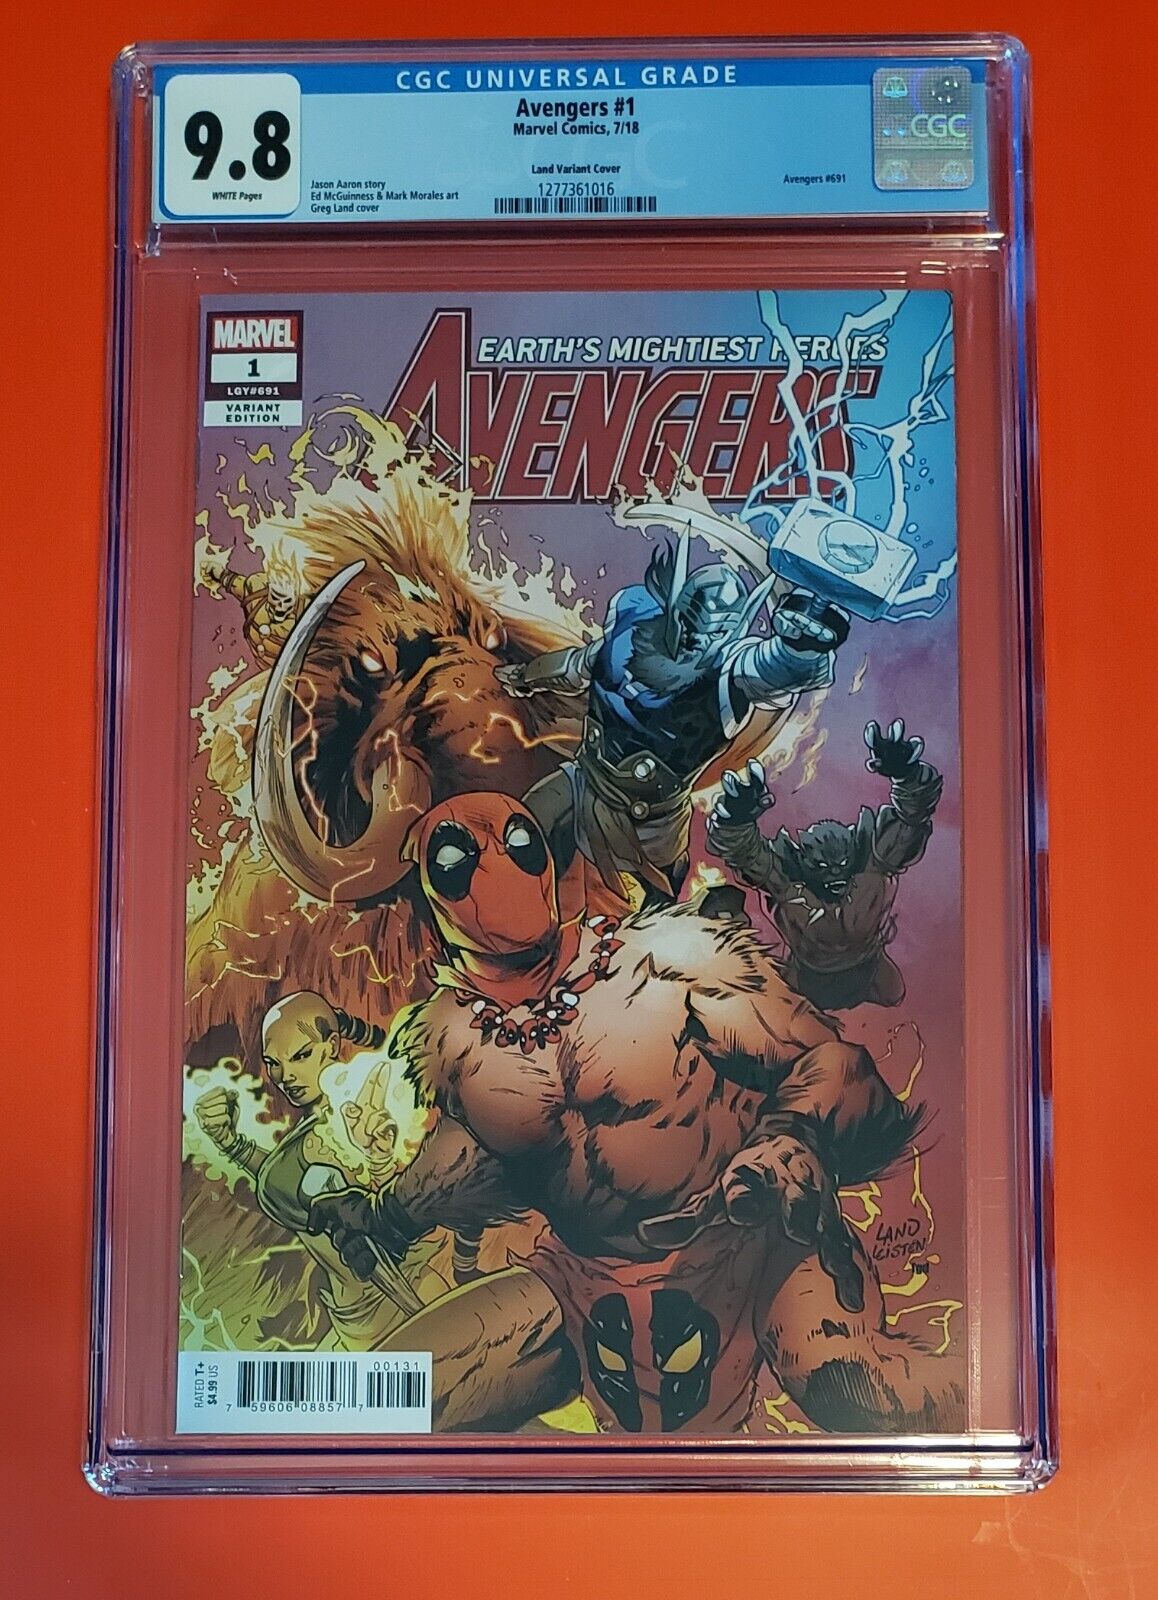 Avengers #1 Marvel Comics 2018 Greg Land Variant w/ Deadpool 691 CGC 9.8